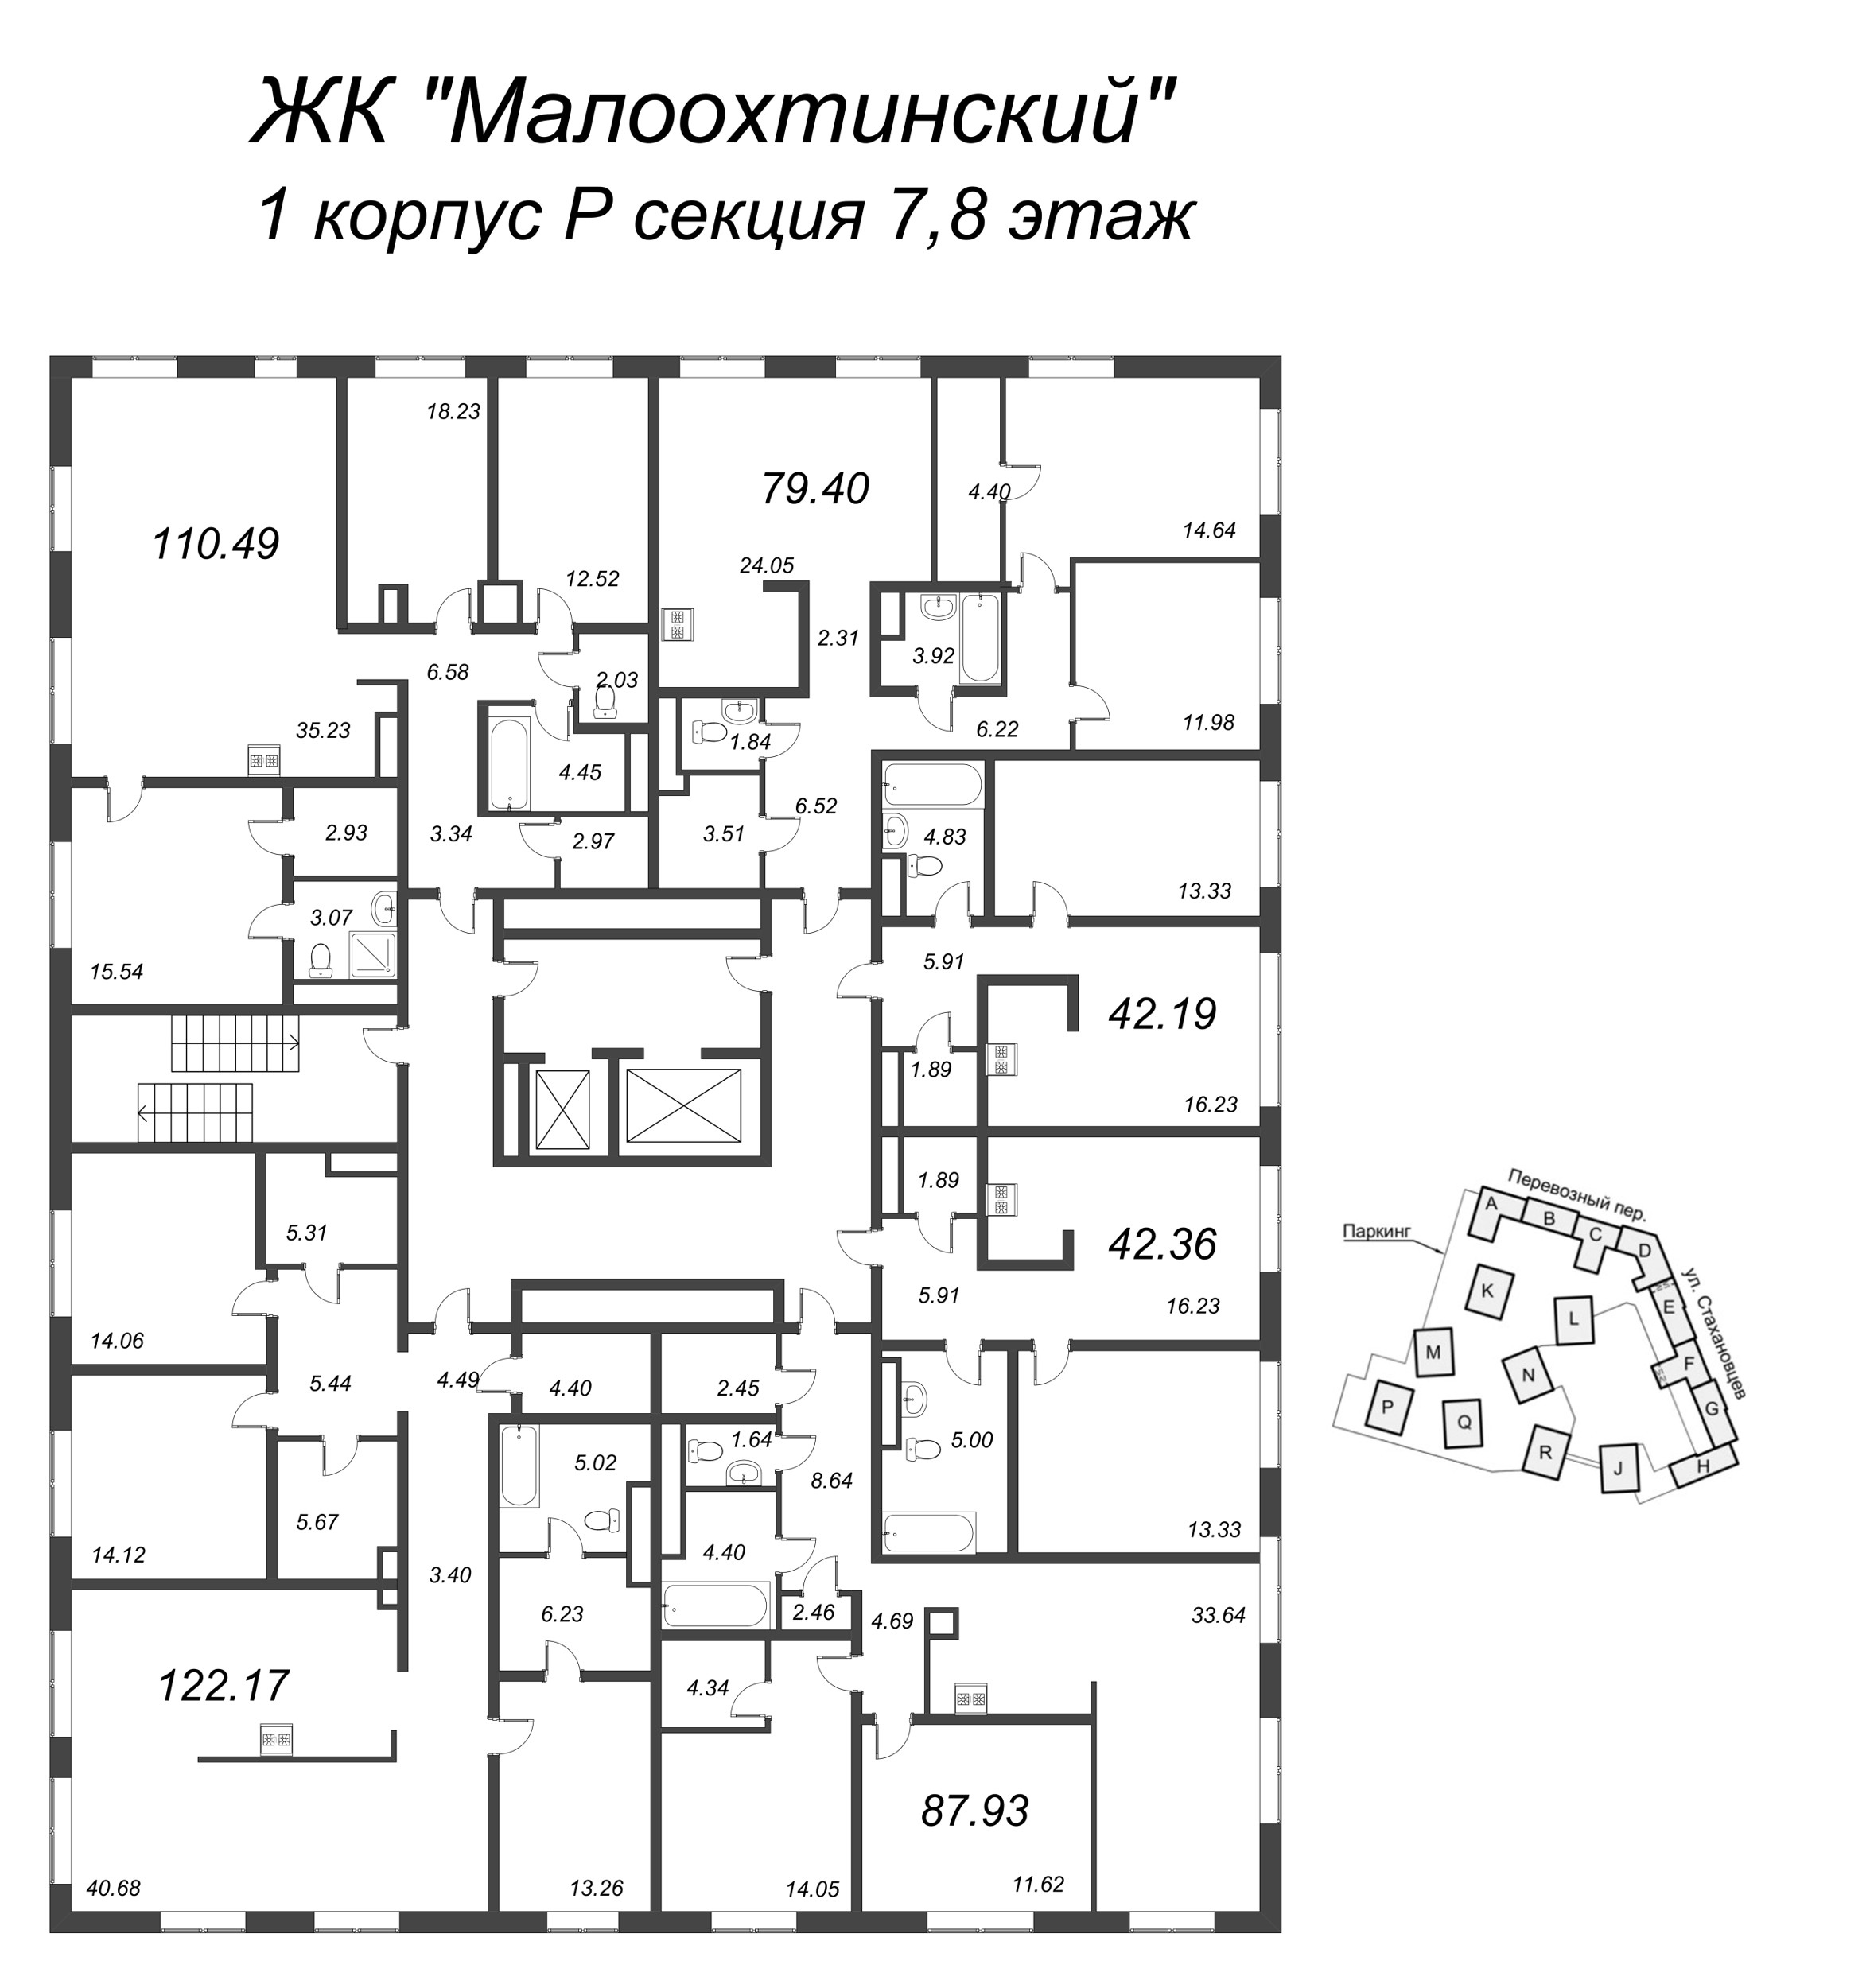 2-комнатная (Евро) квартира, 42.9 м² - планировка этажа